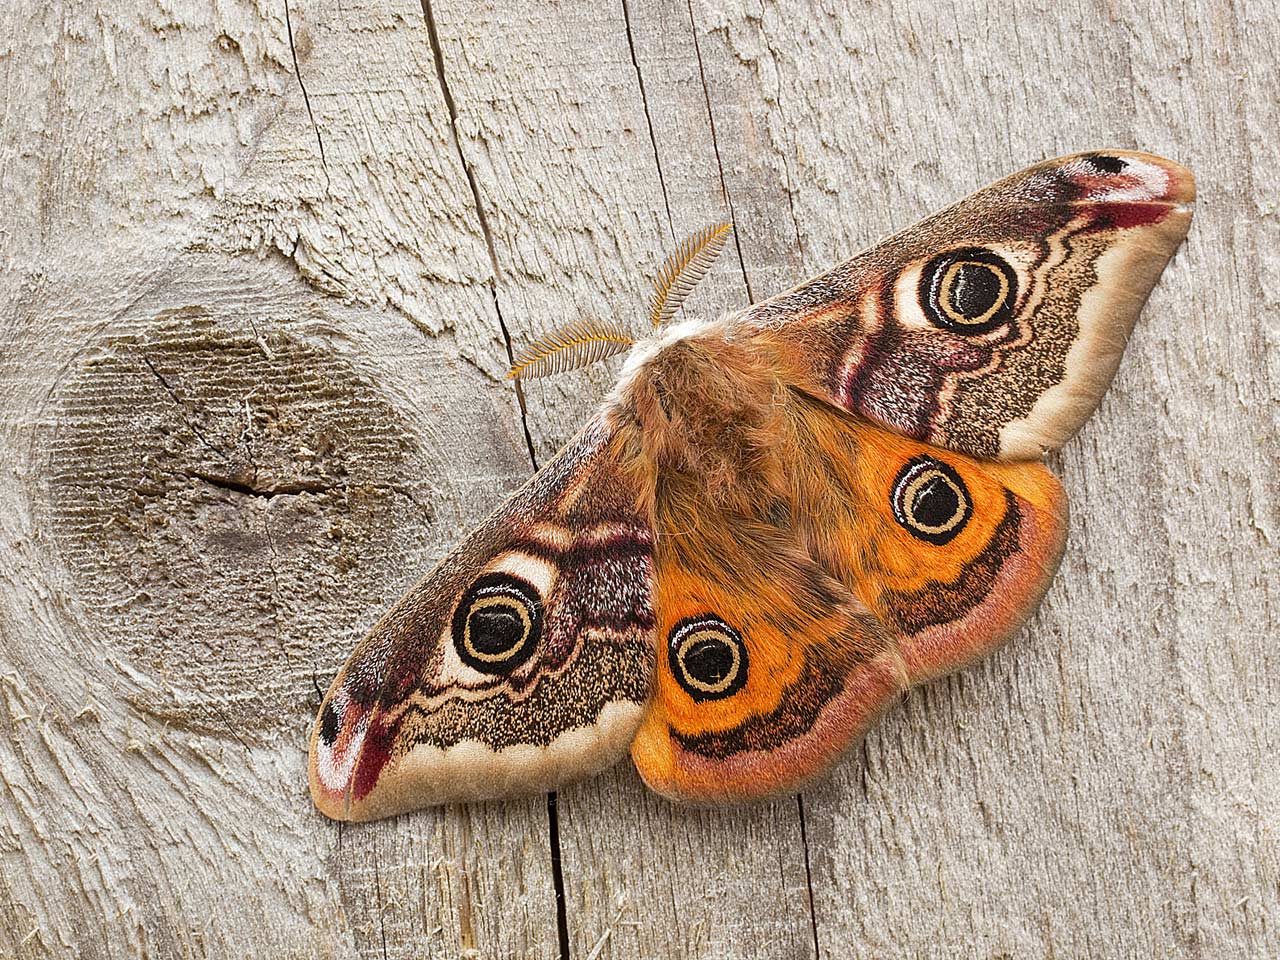 Emperor moth photographed by David Chapman